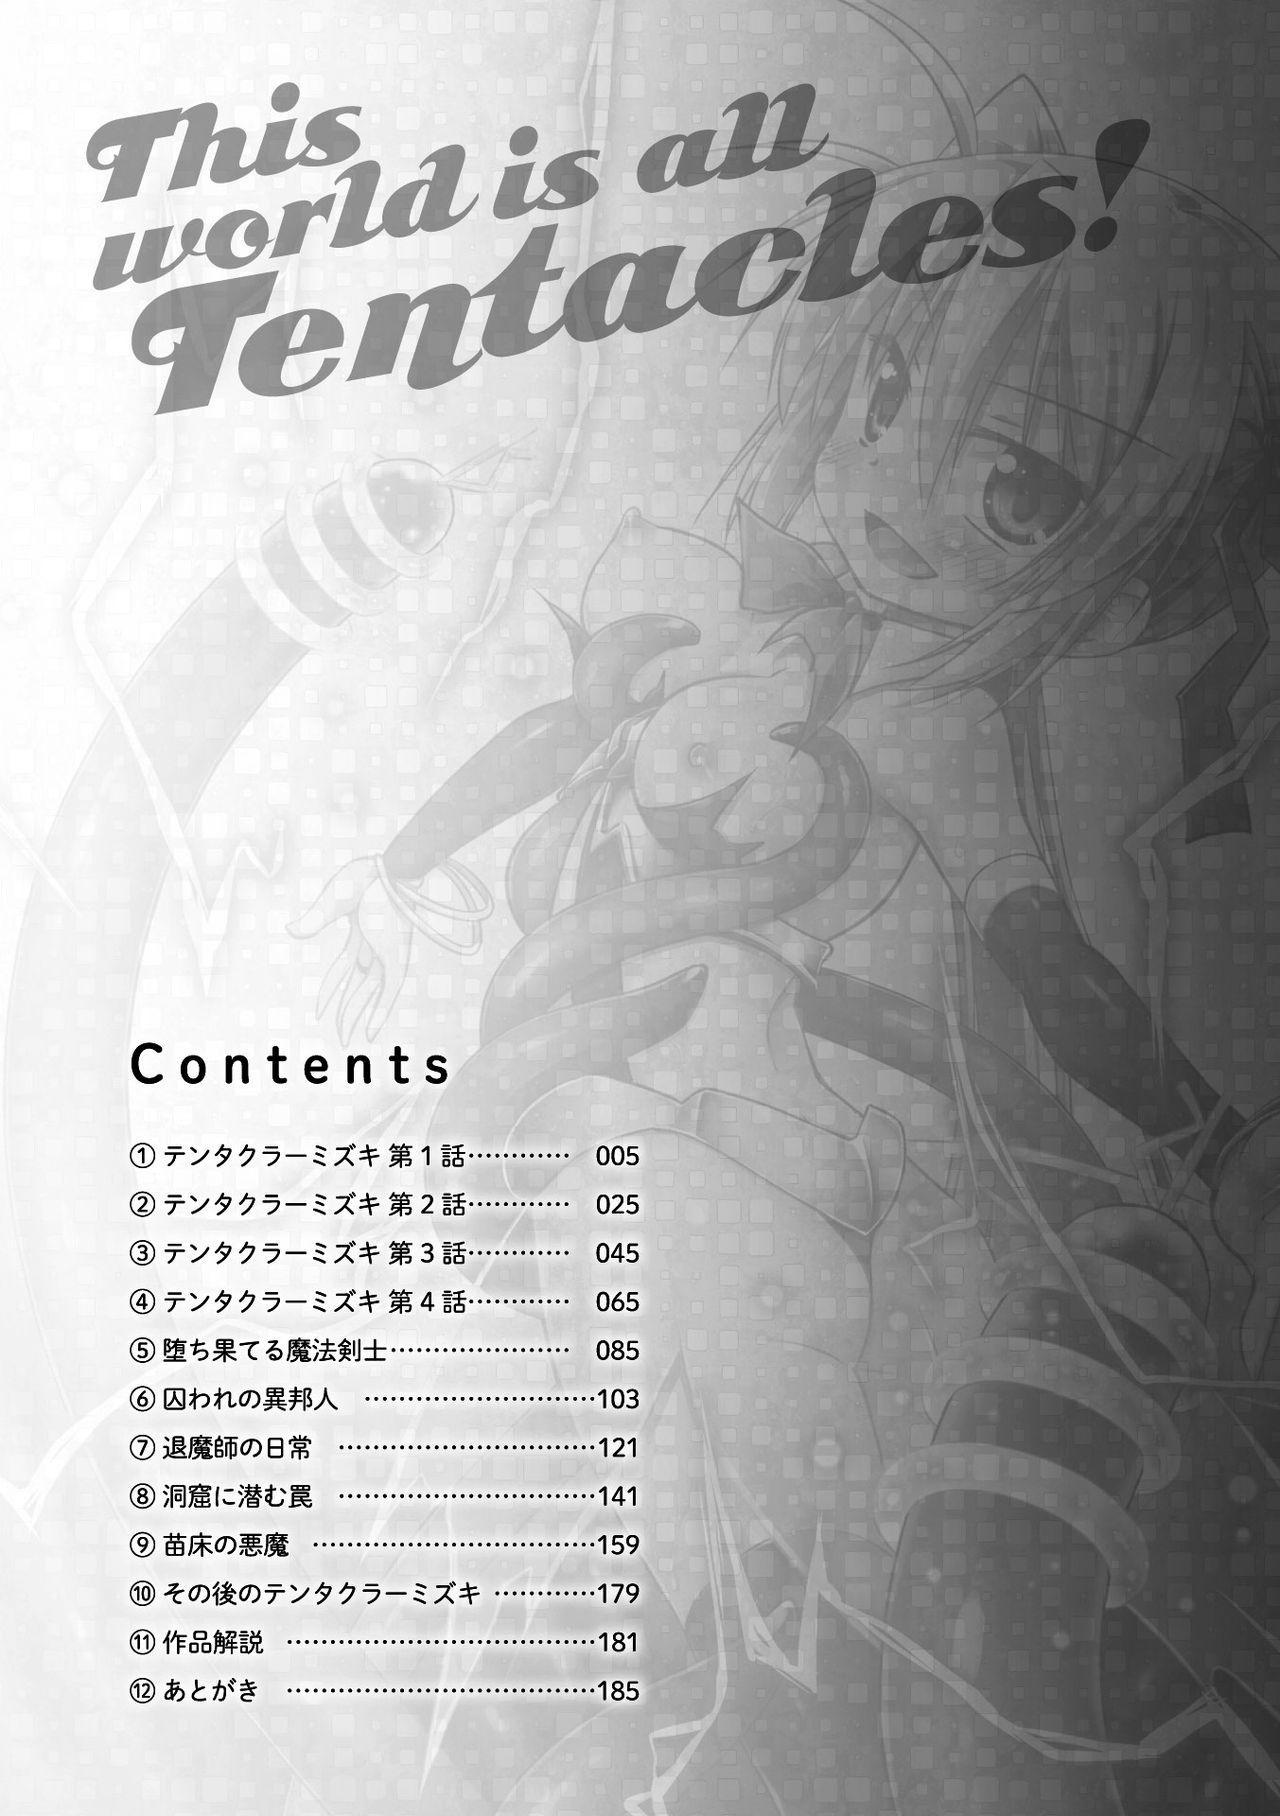 This World is all Tentacles | Konoyo wa Subete Tentacle! 3